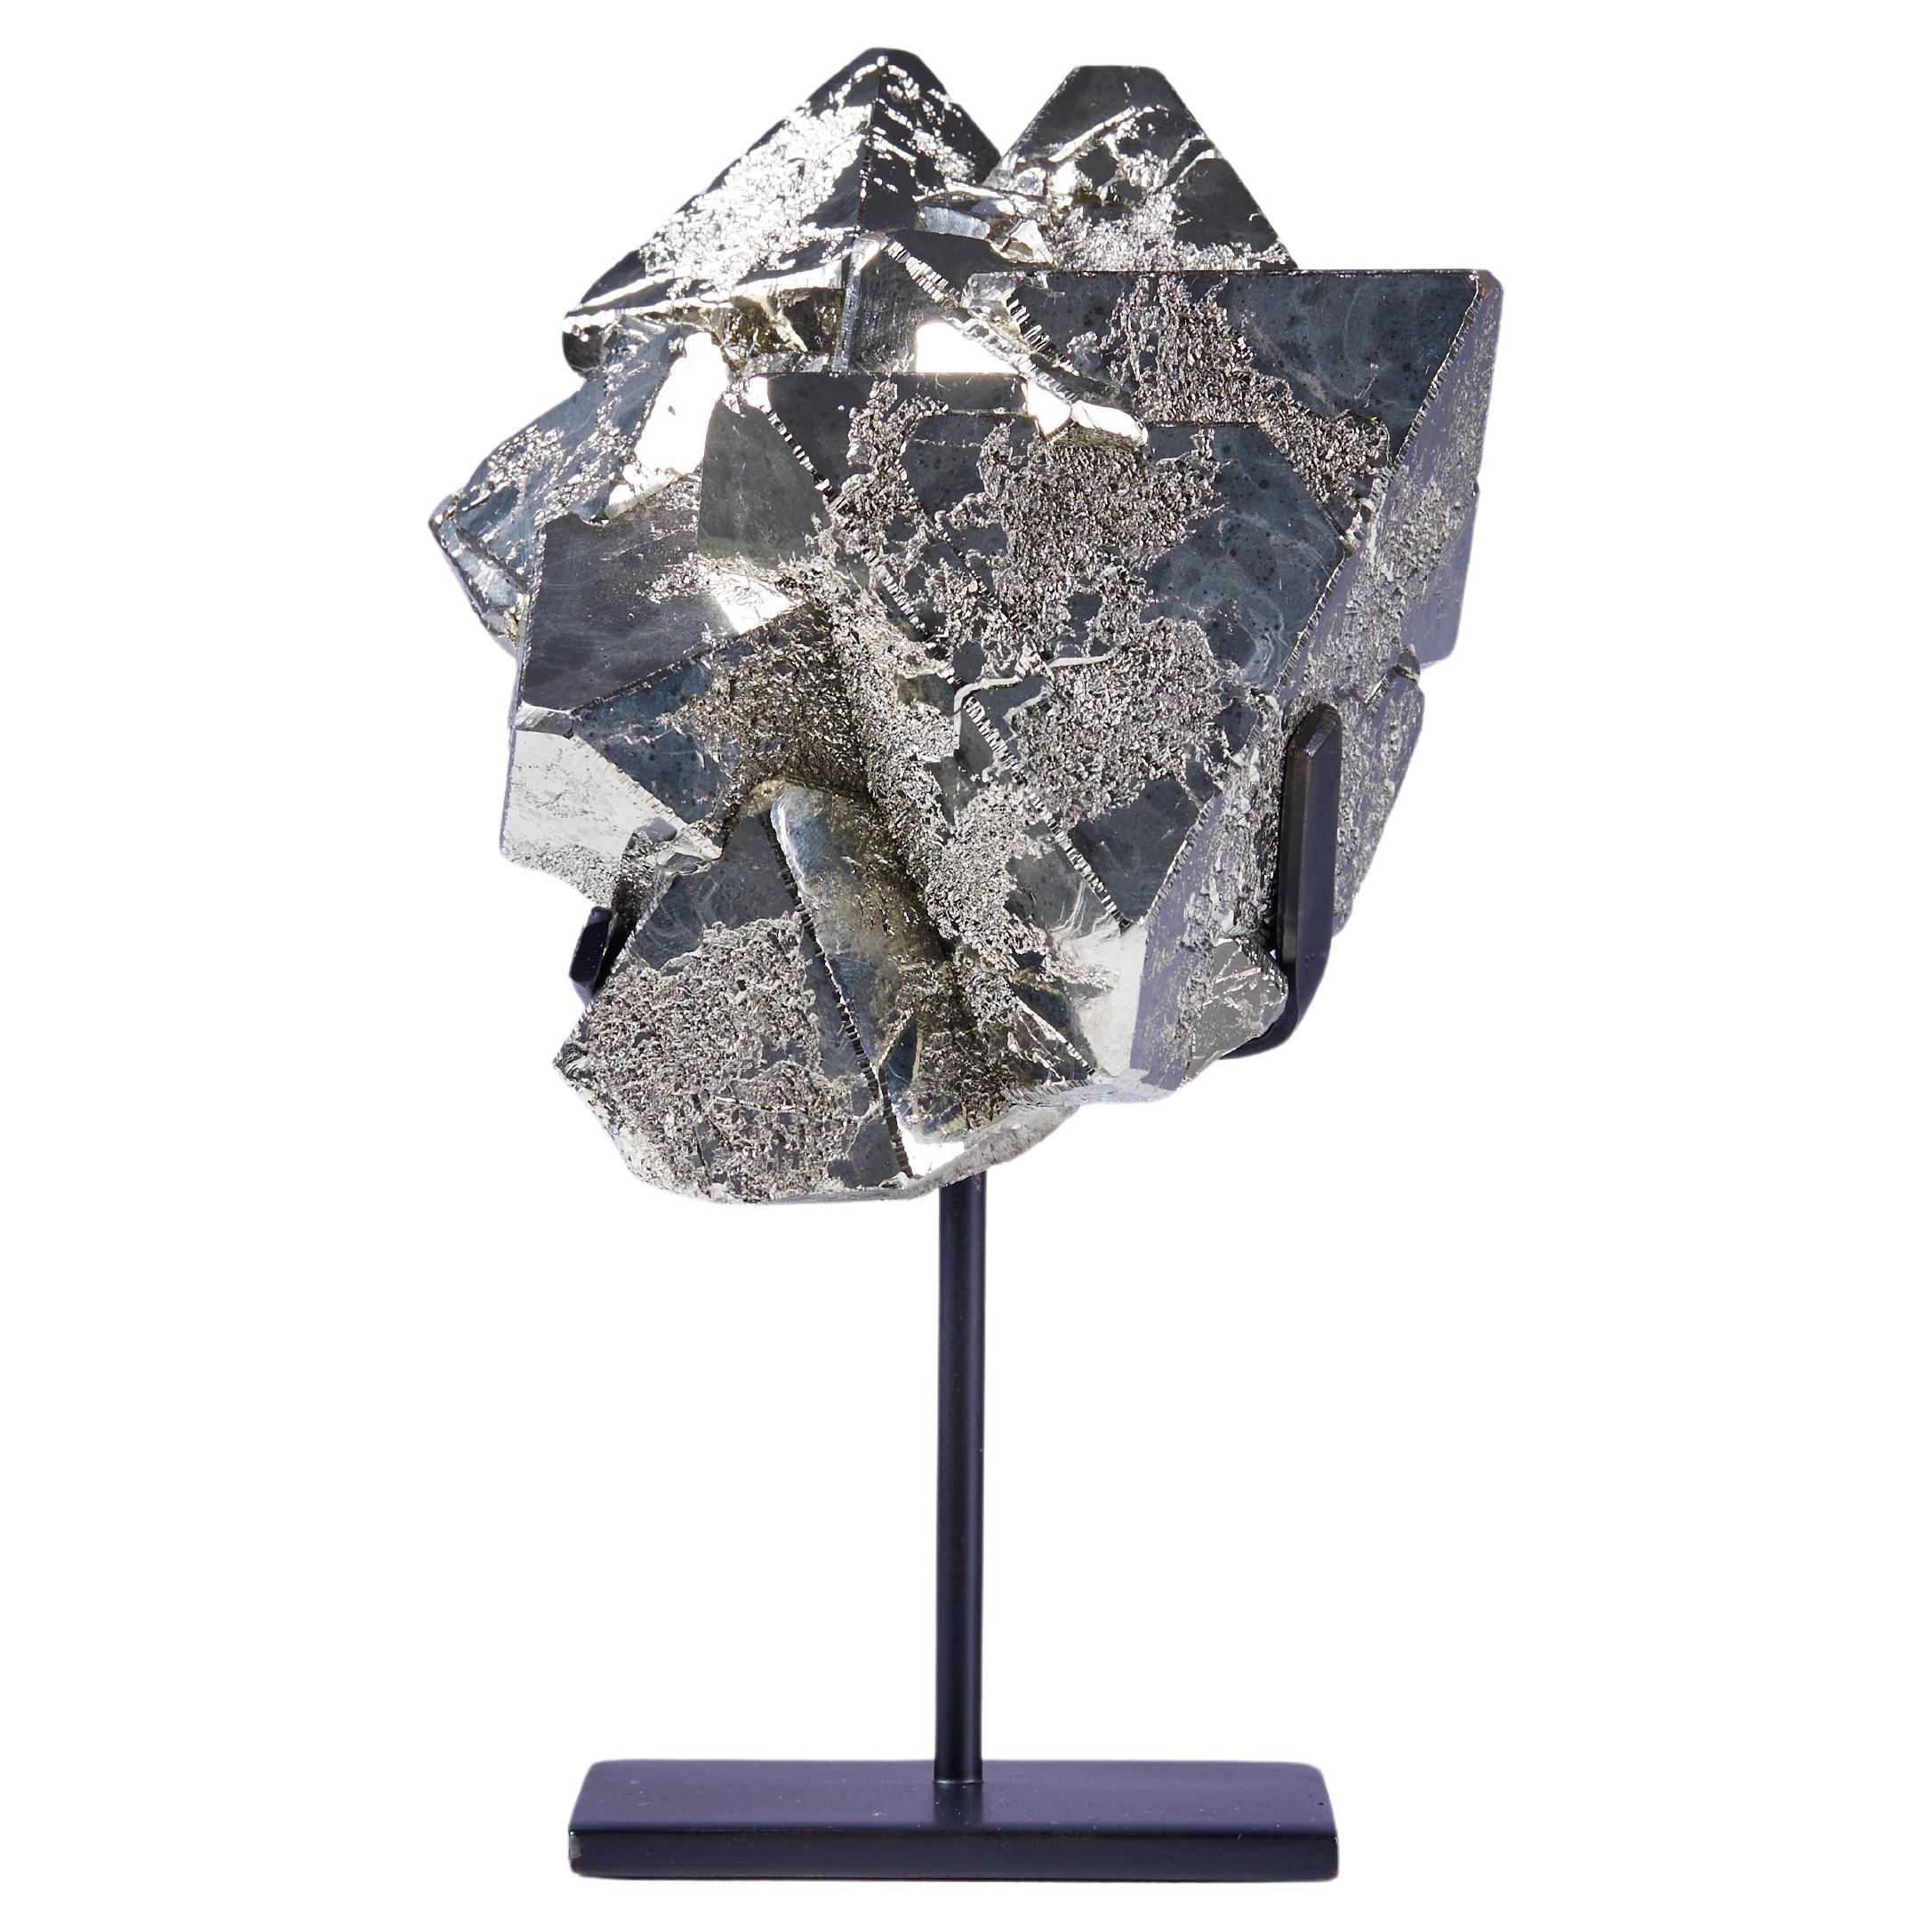 Unusual triangular pyrite For Sale